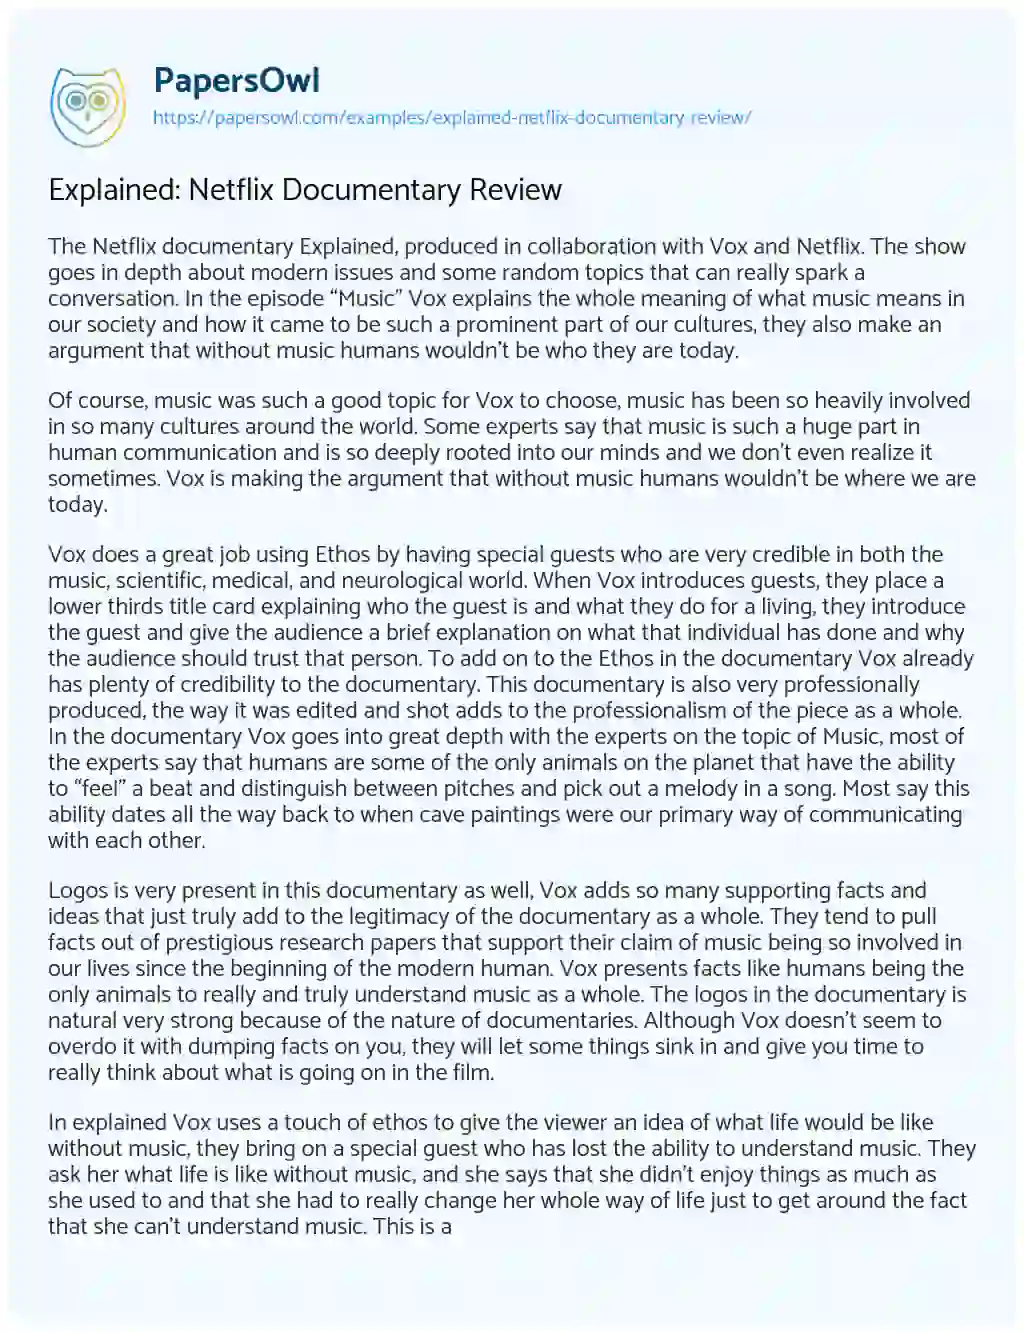 Explained: Netflix Documentary Review essay